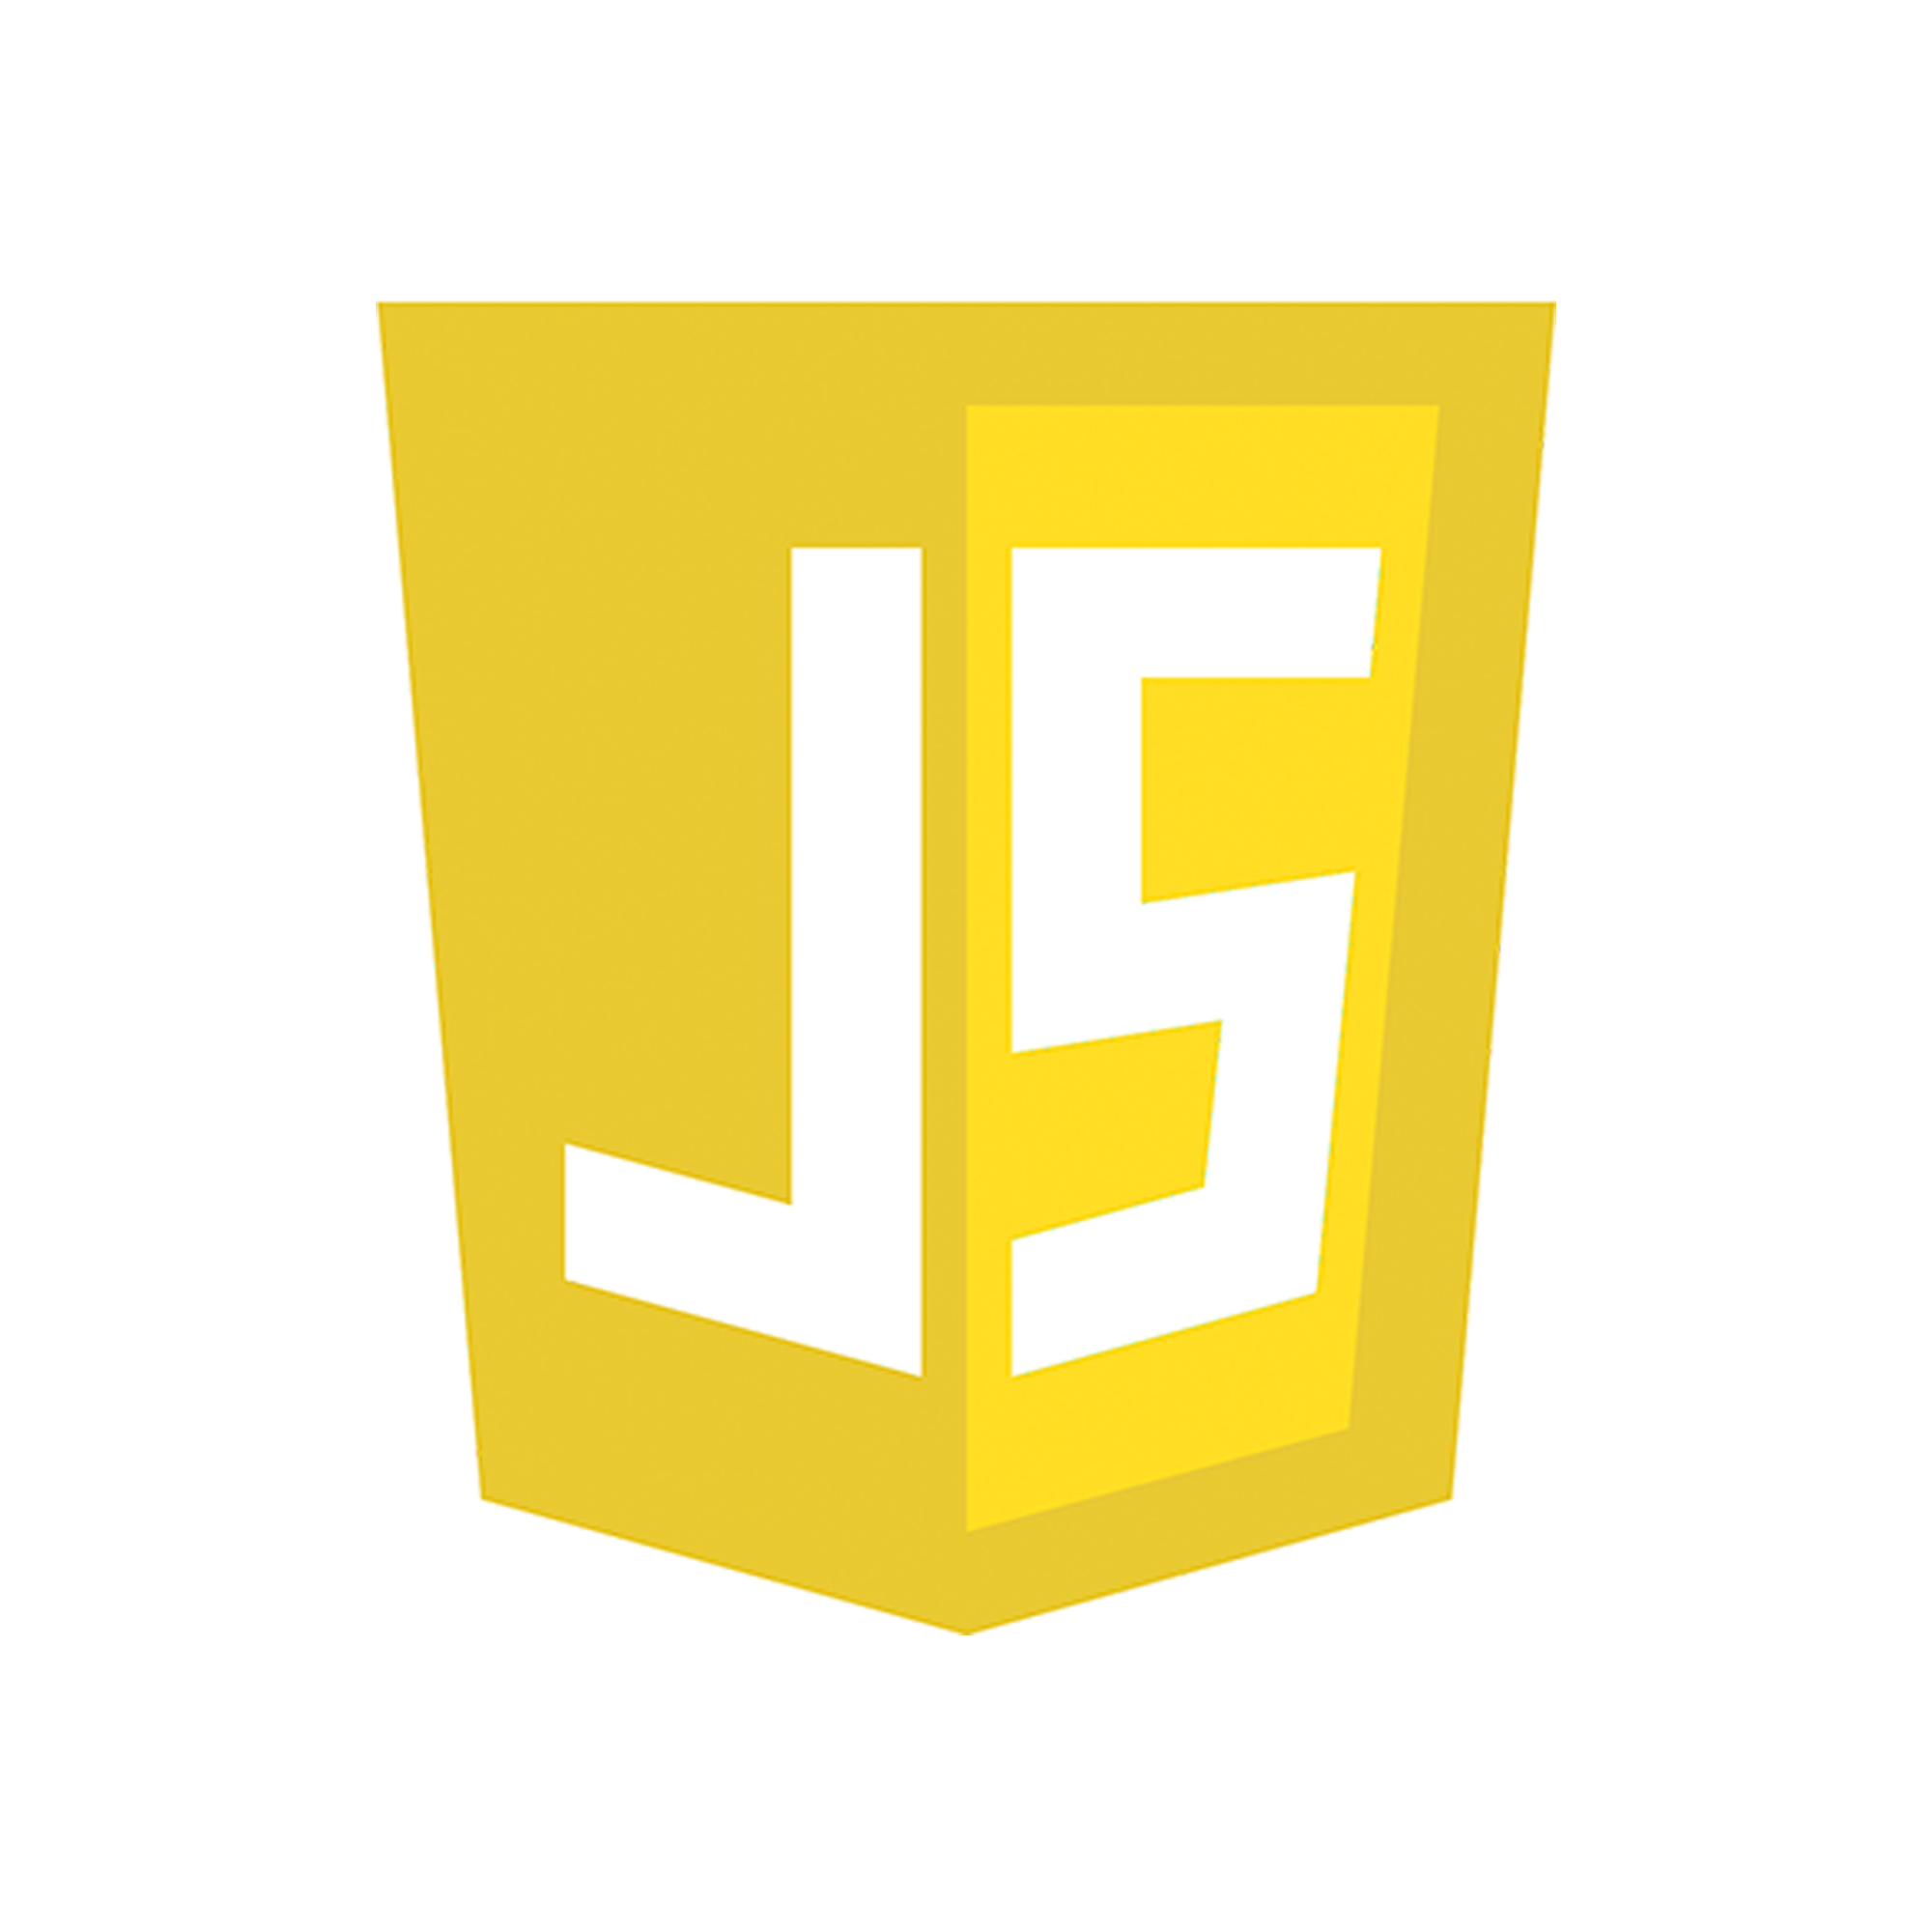 html5 logo, html logo